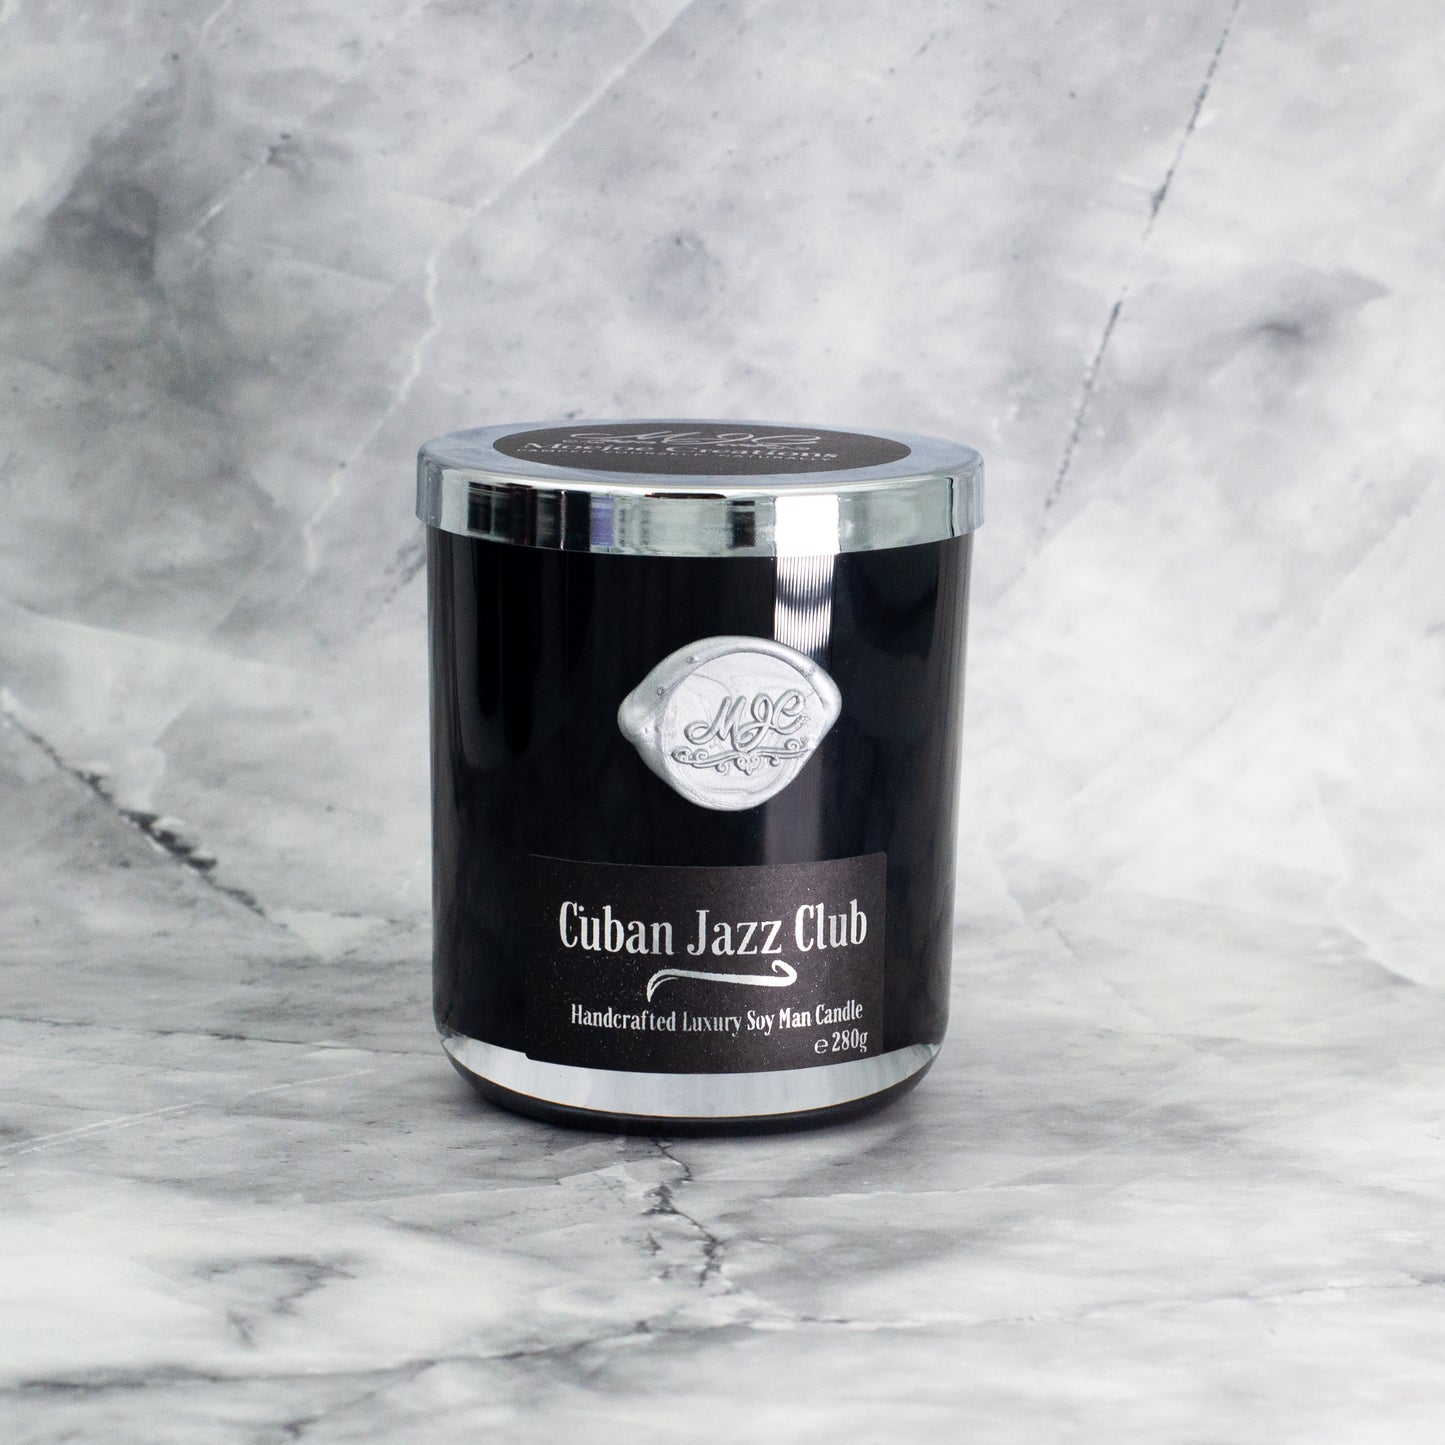 Cuban Jazz Club Fragrance Man Candle in Large Black Tumbler 285g/10oz